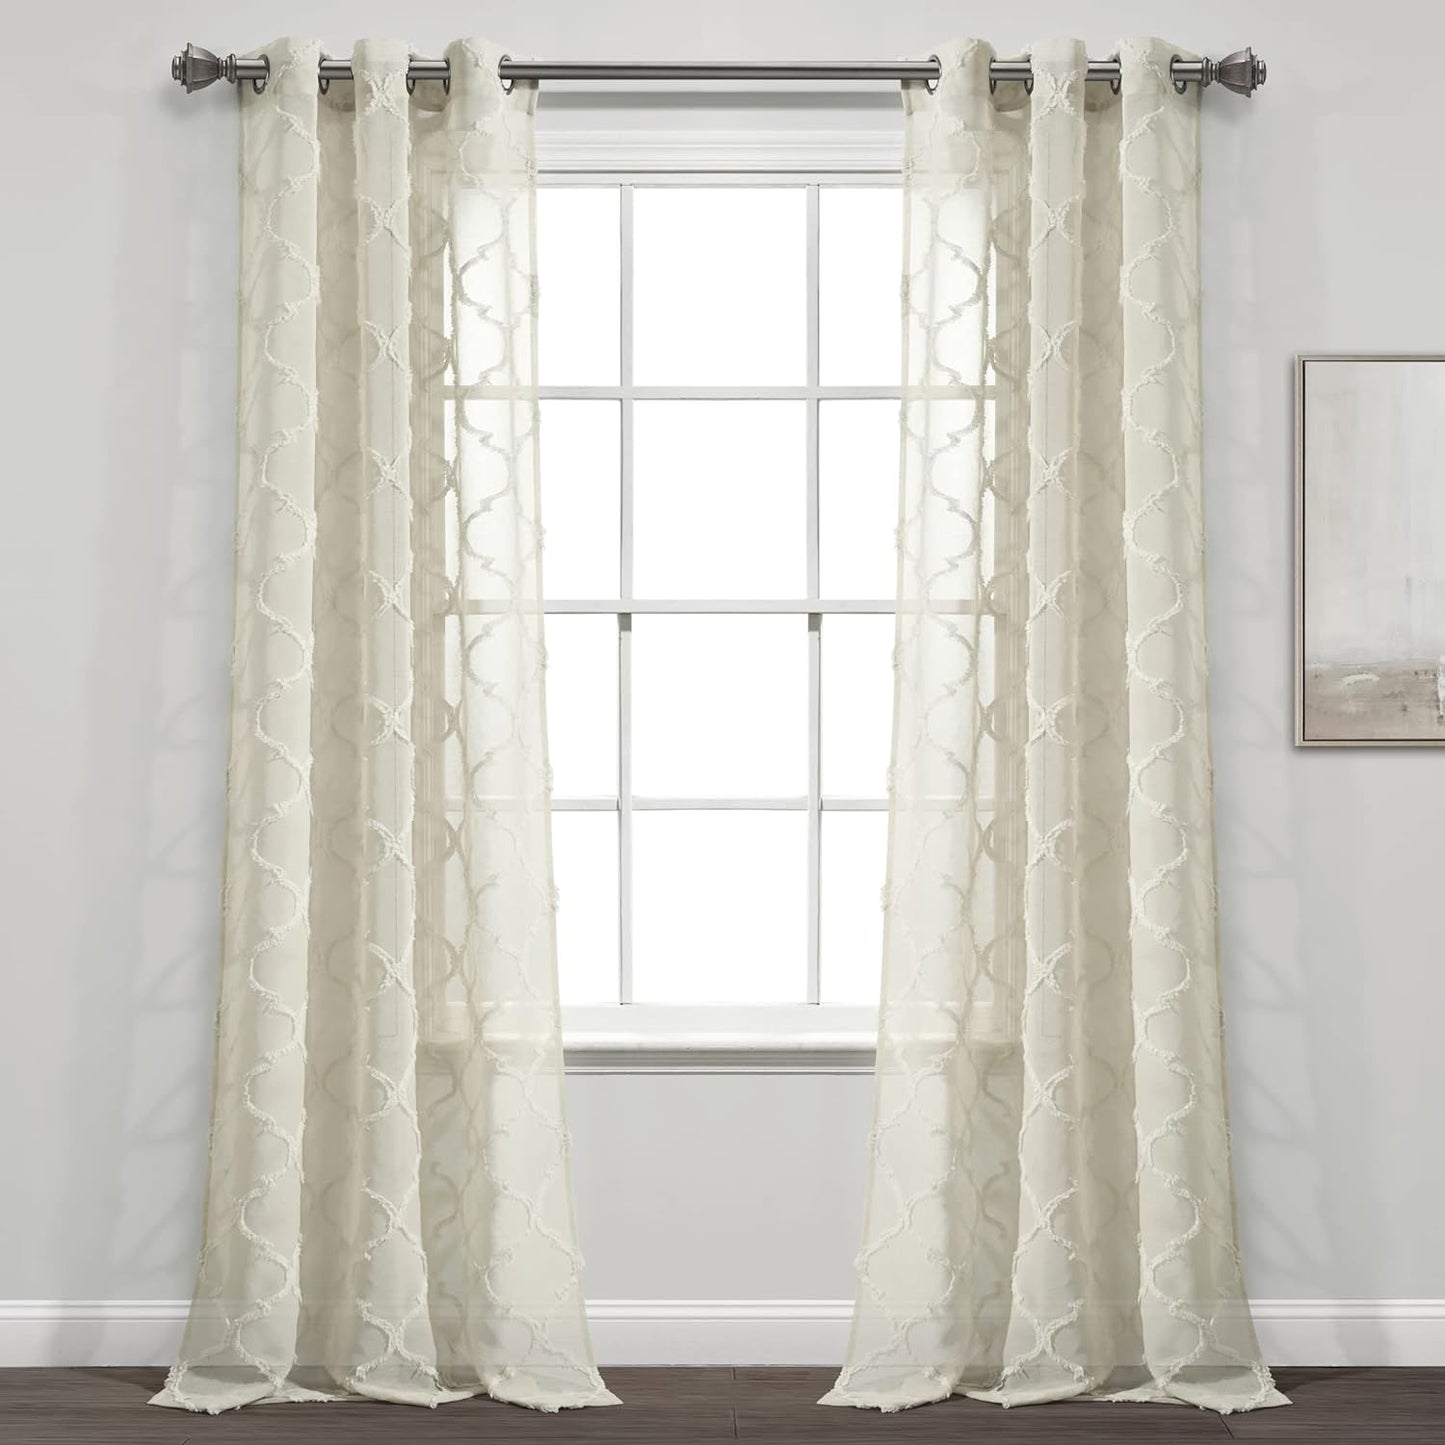 Lush Decor Navy Avon Trellis Grommet Sheer Window Curtain Panel Pair (84" X 38")  Triangle Home Fashions Neutral 38"W X 84"L 